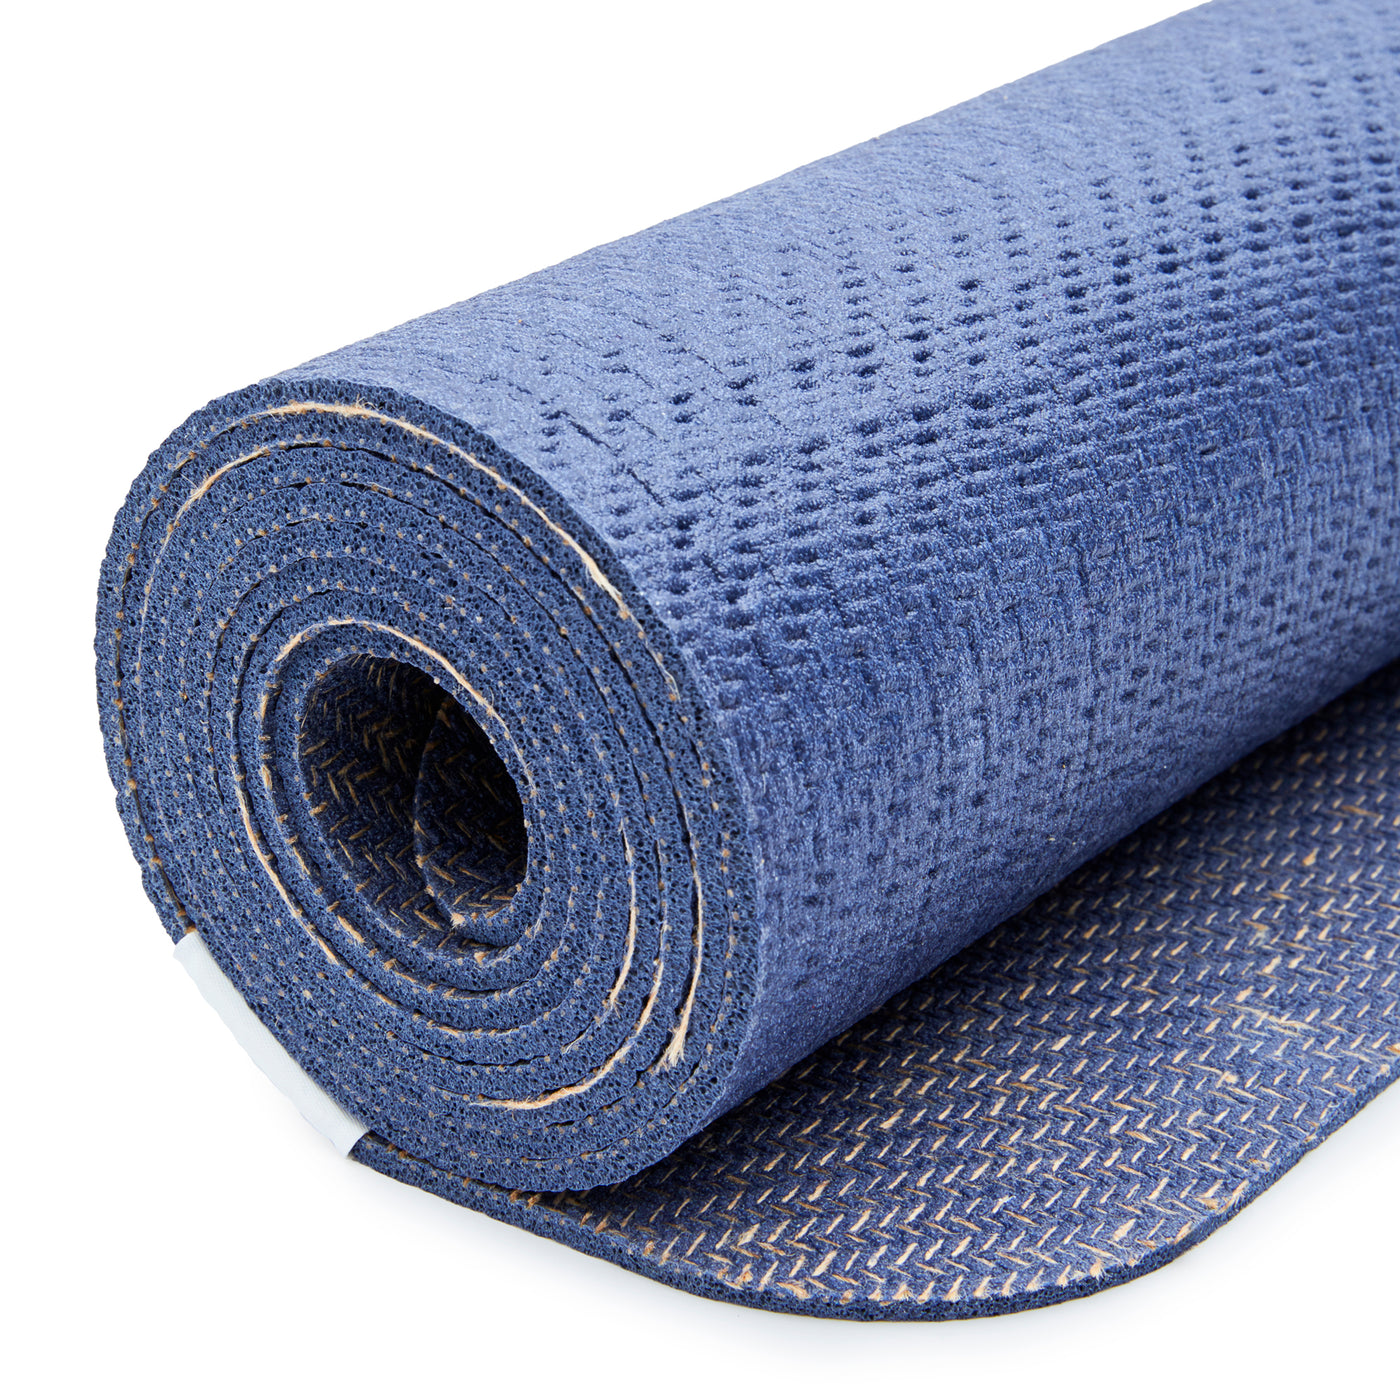 FOILLER Premium Natural Jute Yoga Mat. Organic & Eco Friendly. Non Slip -  Standard Size (71 x 24 x 5mm) for Women and Men, Workout Mat for Yoga